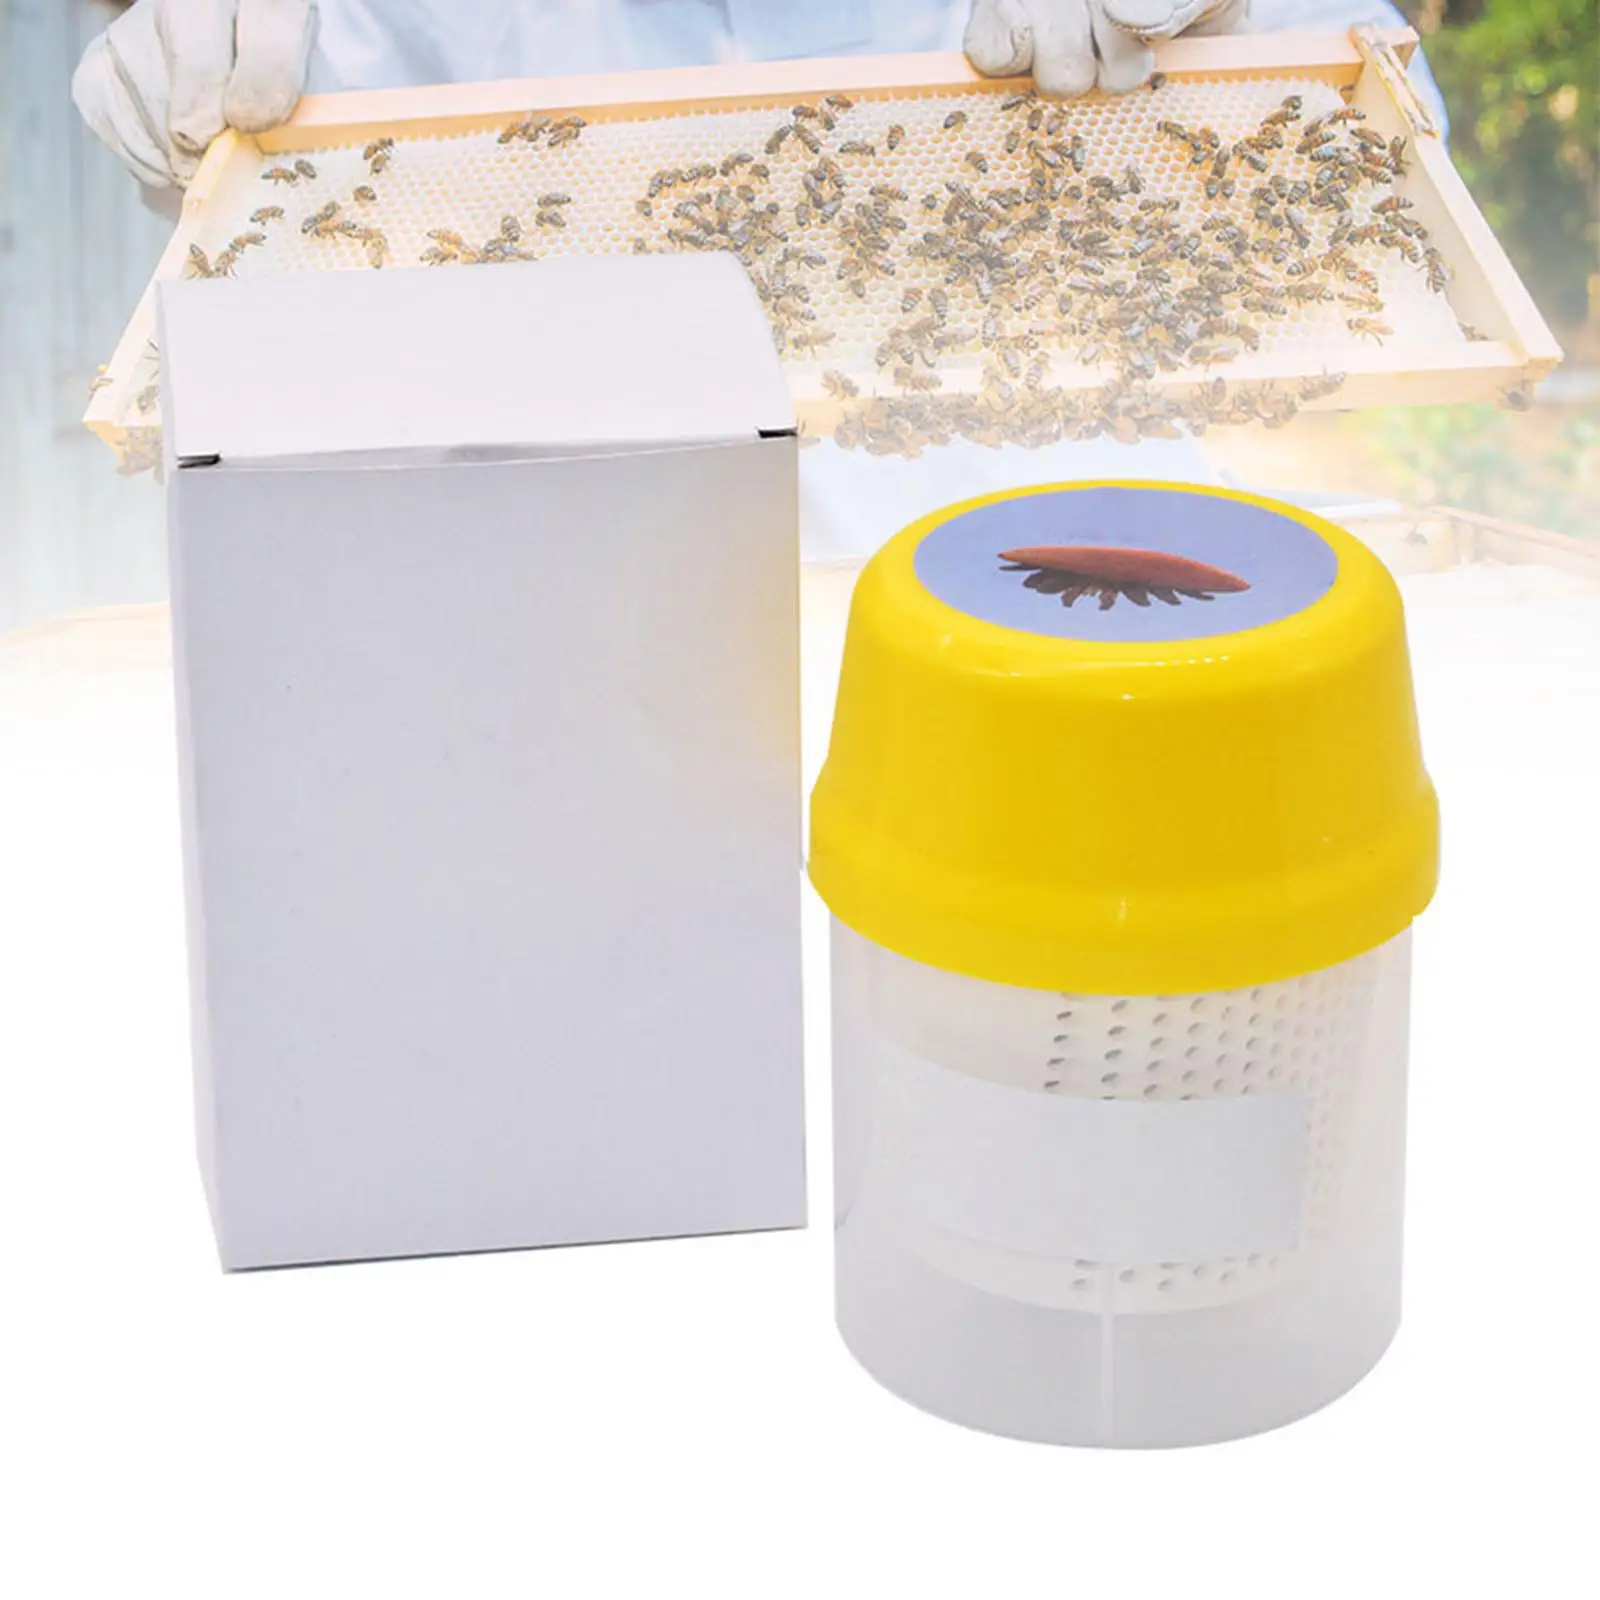 Plastic Varroa Shaker Monitoring   Beekeeping Equipment Tool